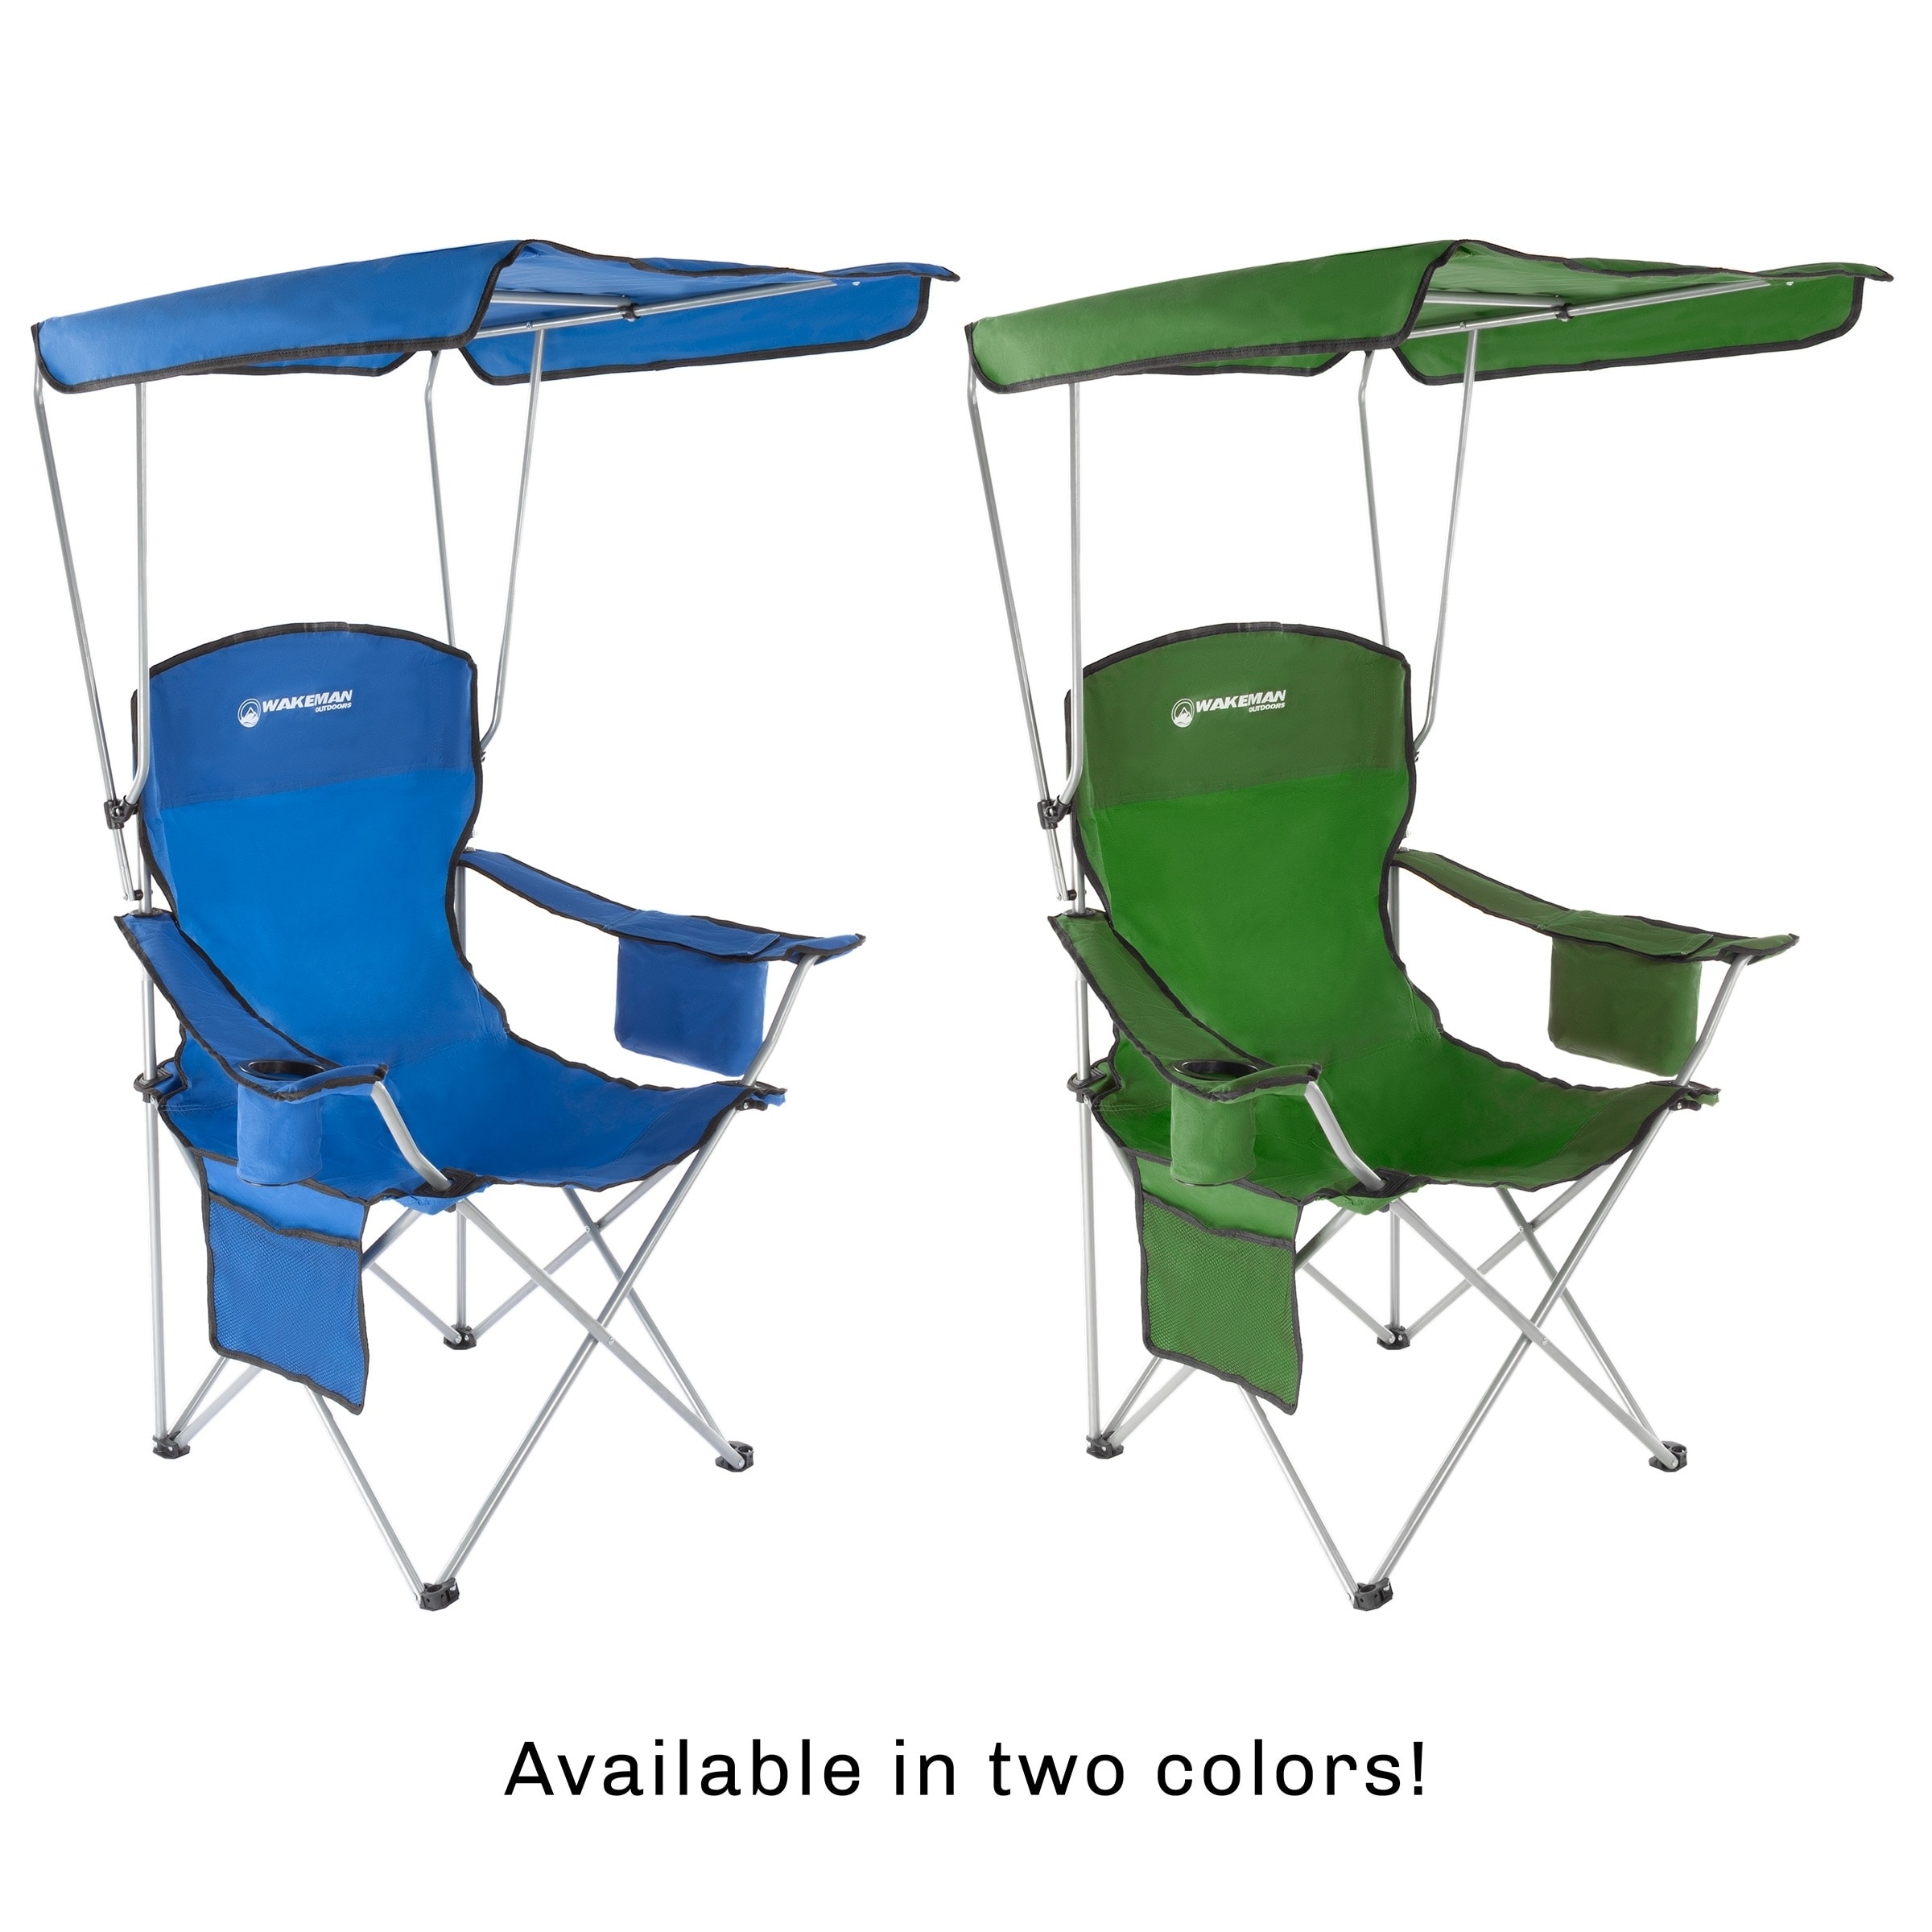 camp chair canopy 300lbs capacitywakeman outdoors